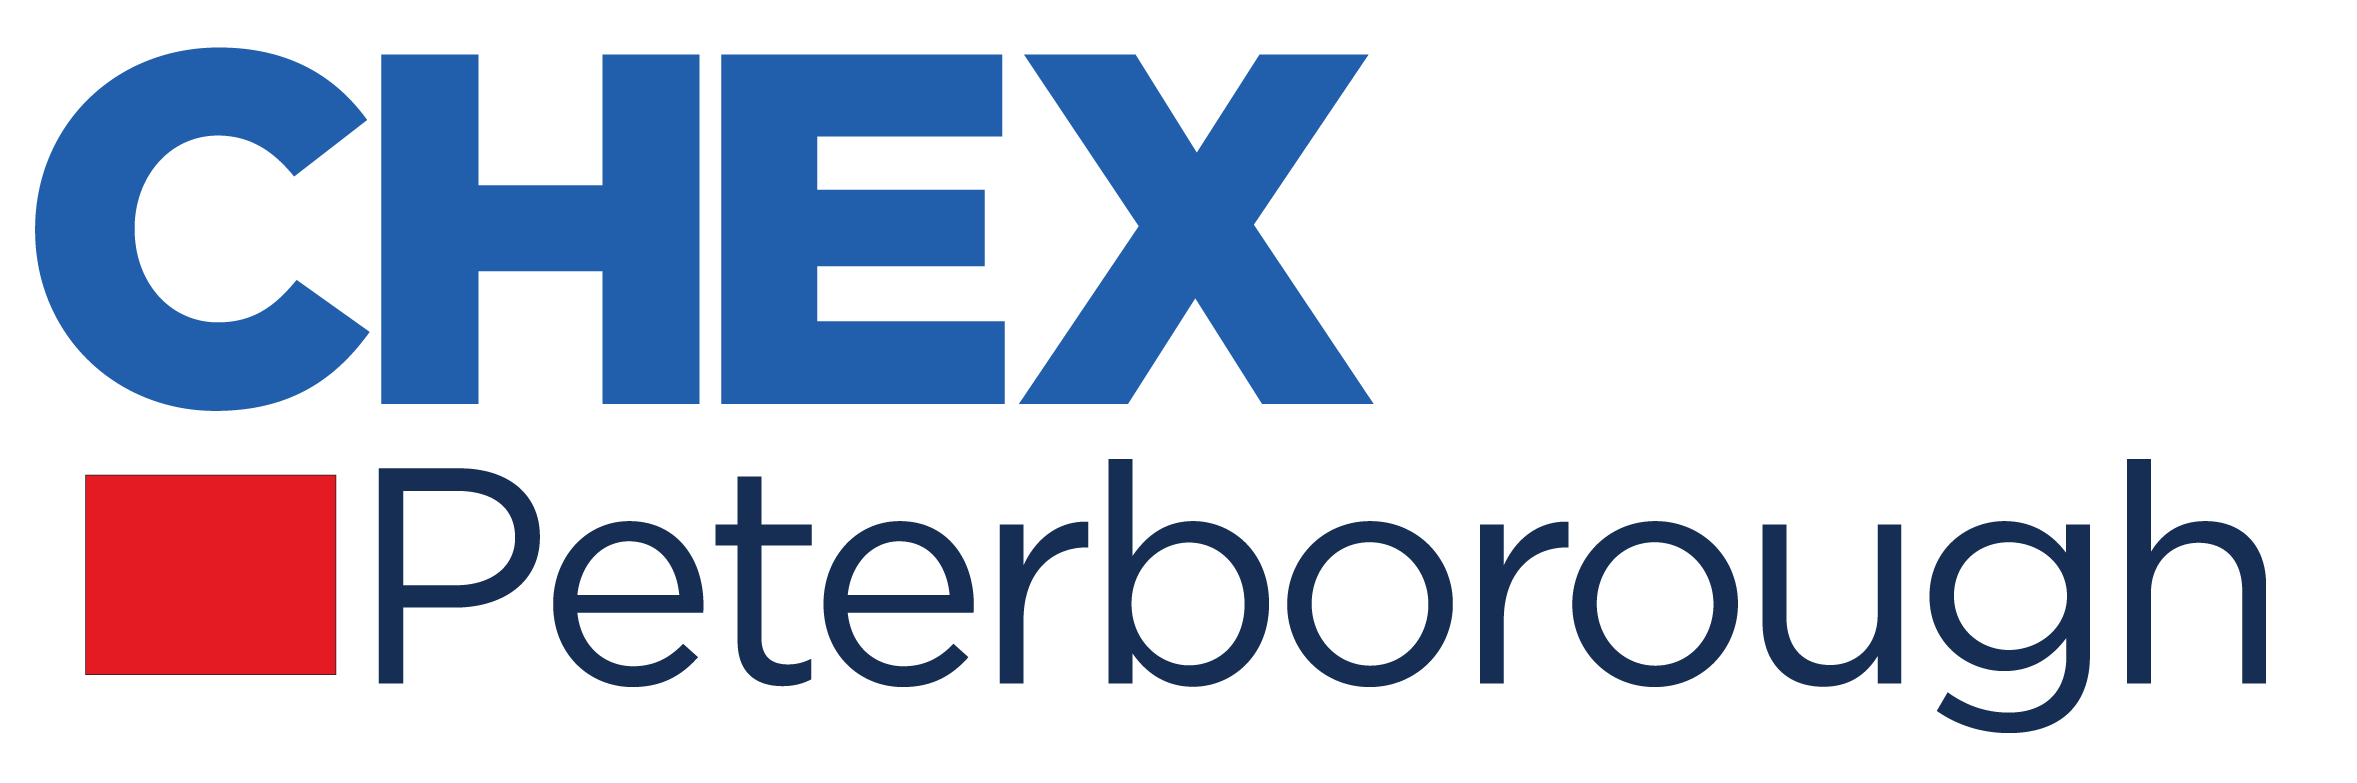 Chex Logo - CHEX Ptbo Logo Blue - Kawartha-Haliburton Children's Foundation